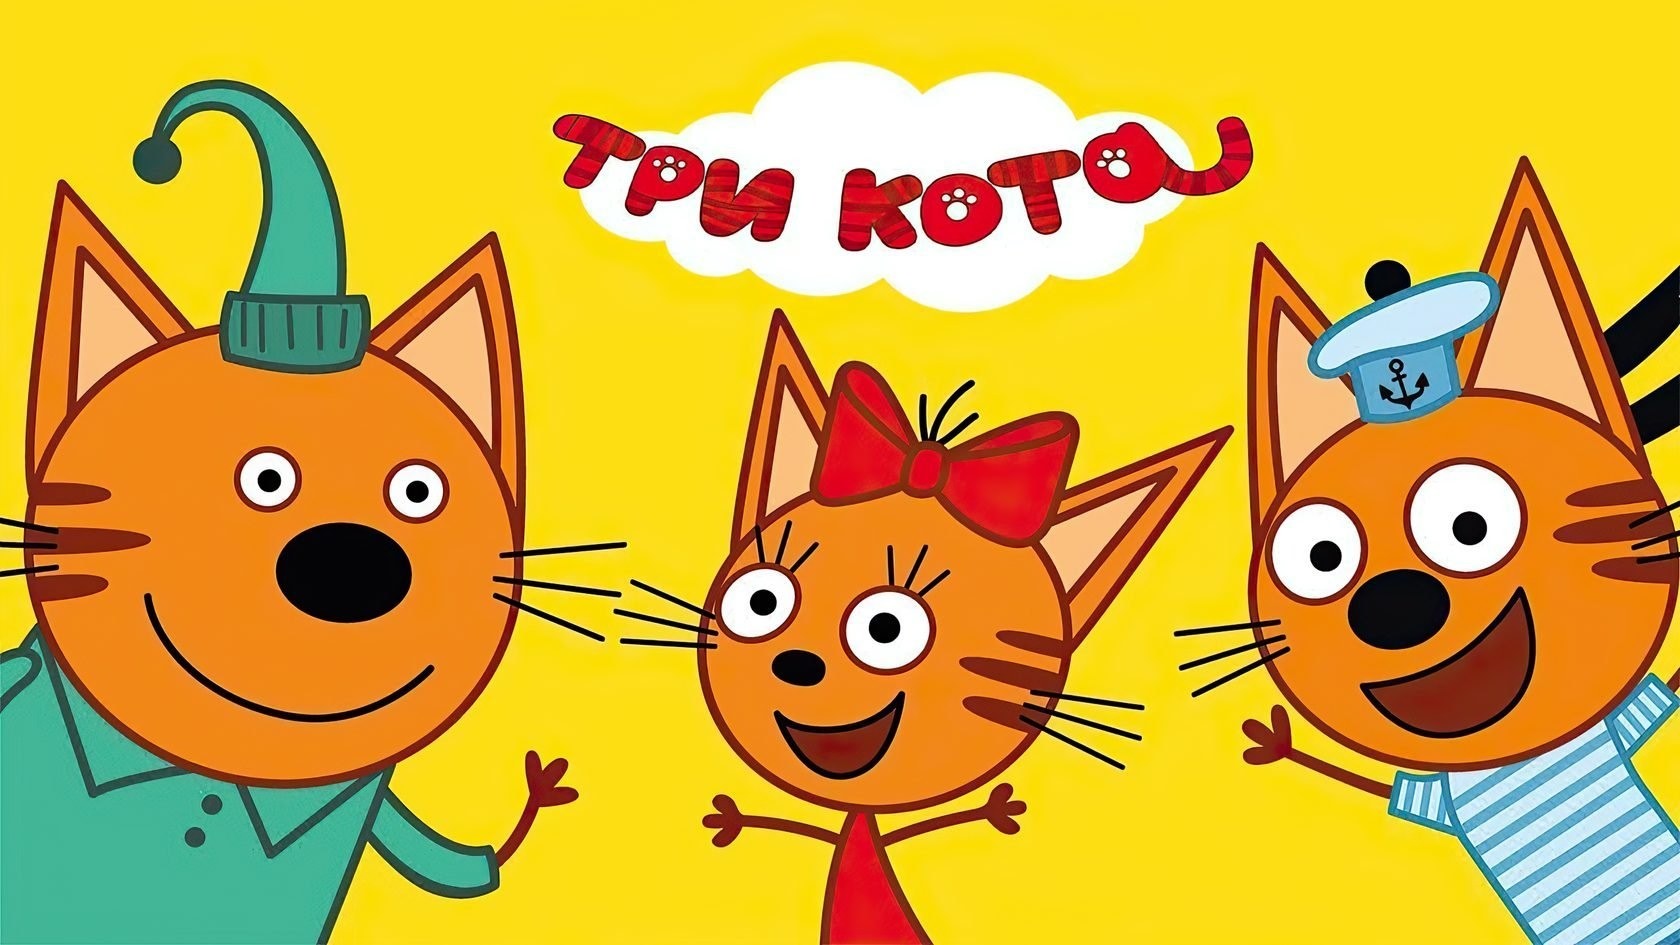 Песня коржика. 3 Кота 3 хвоста Миу Миу. Три кота Коржик Карамелька и компот Миу Миу.